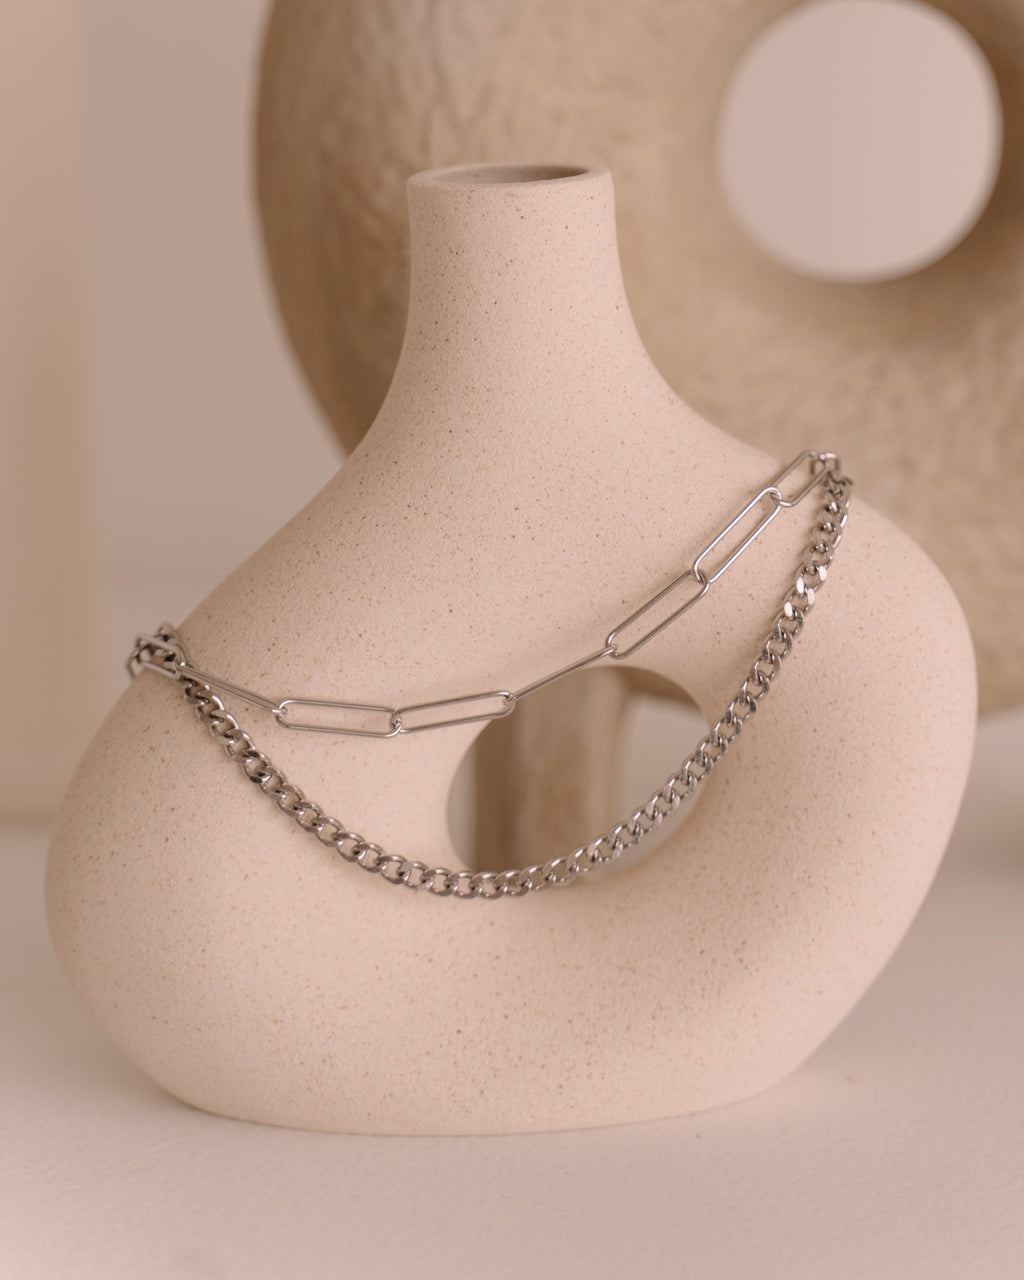 Interchain layered necklace